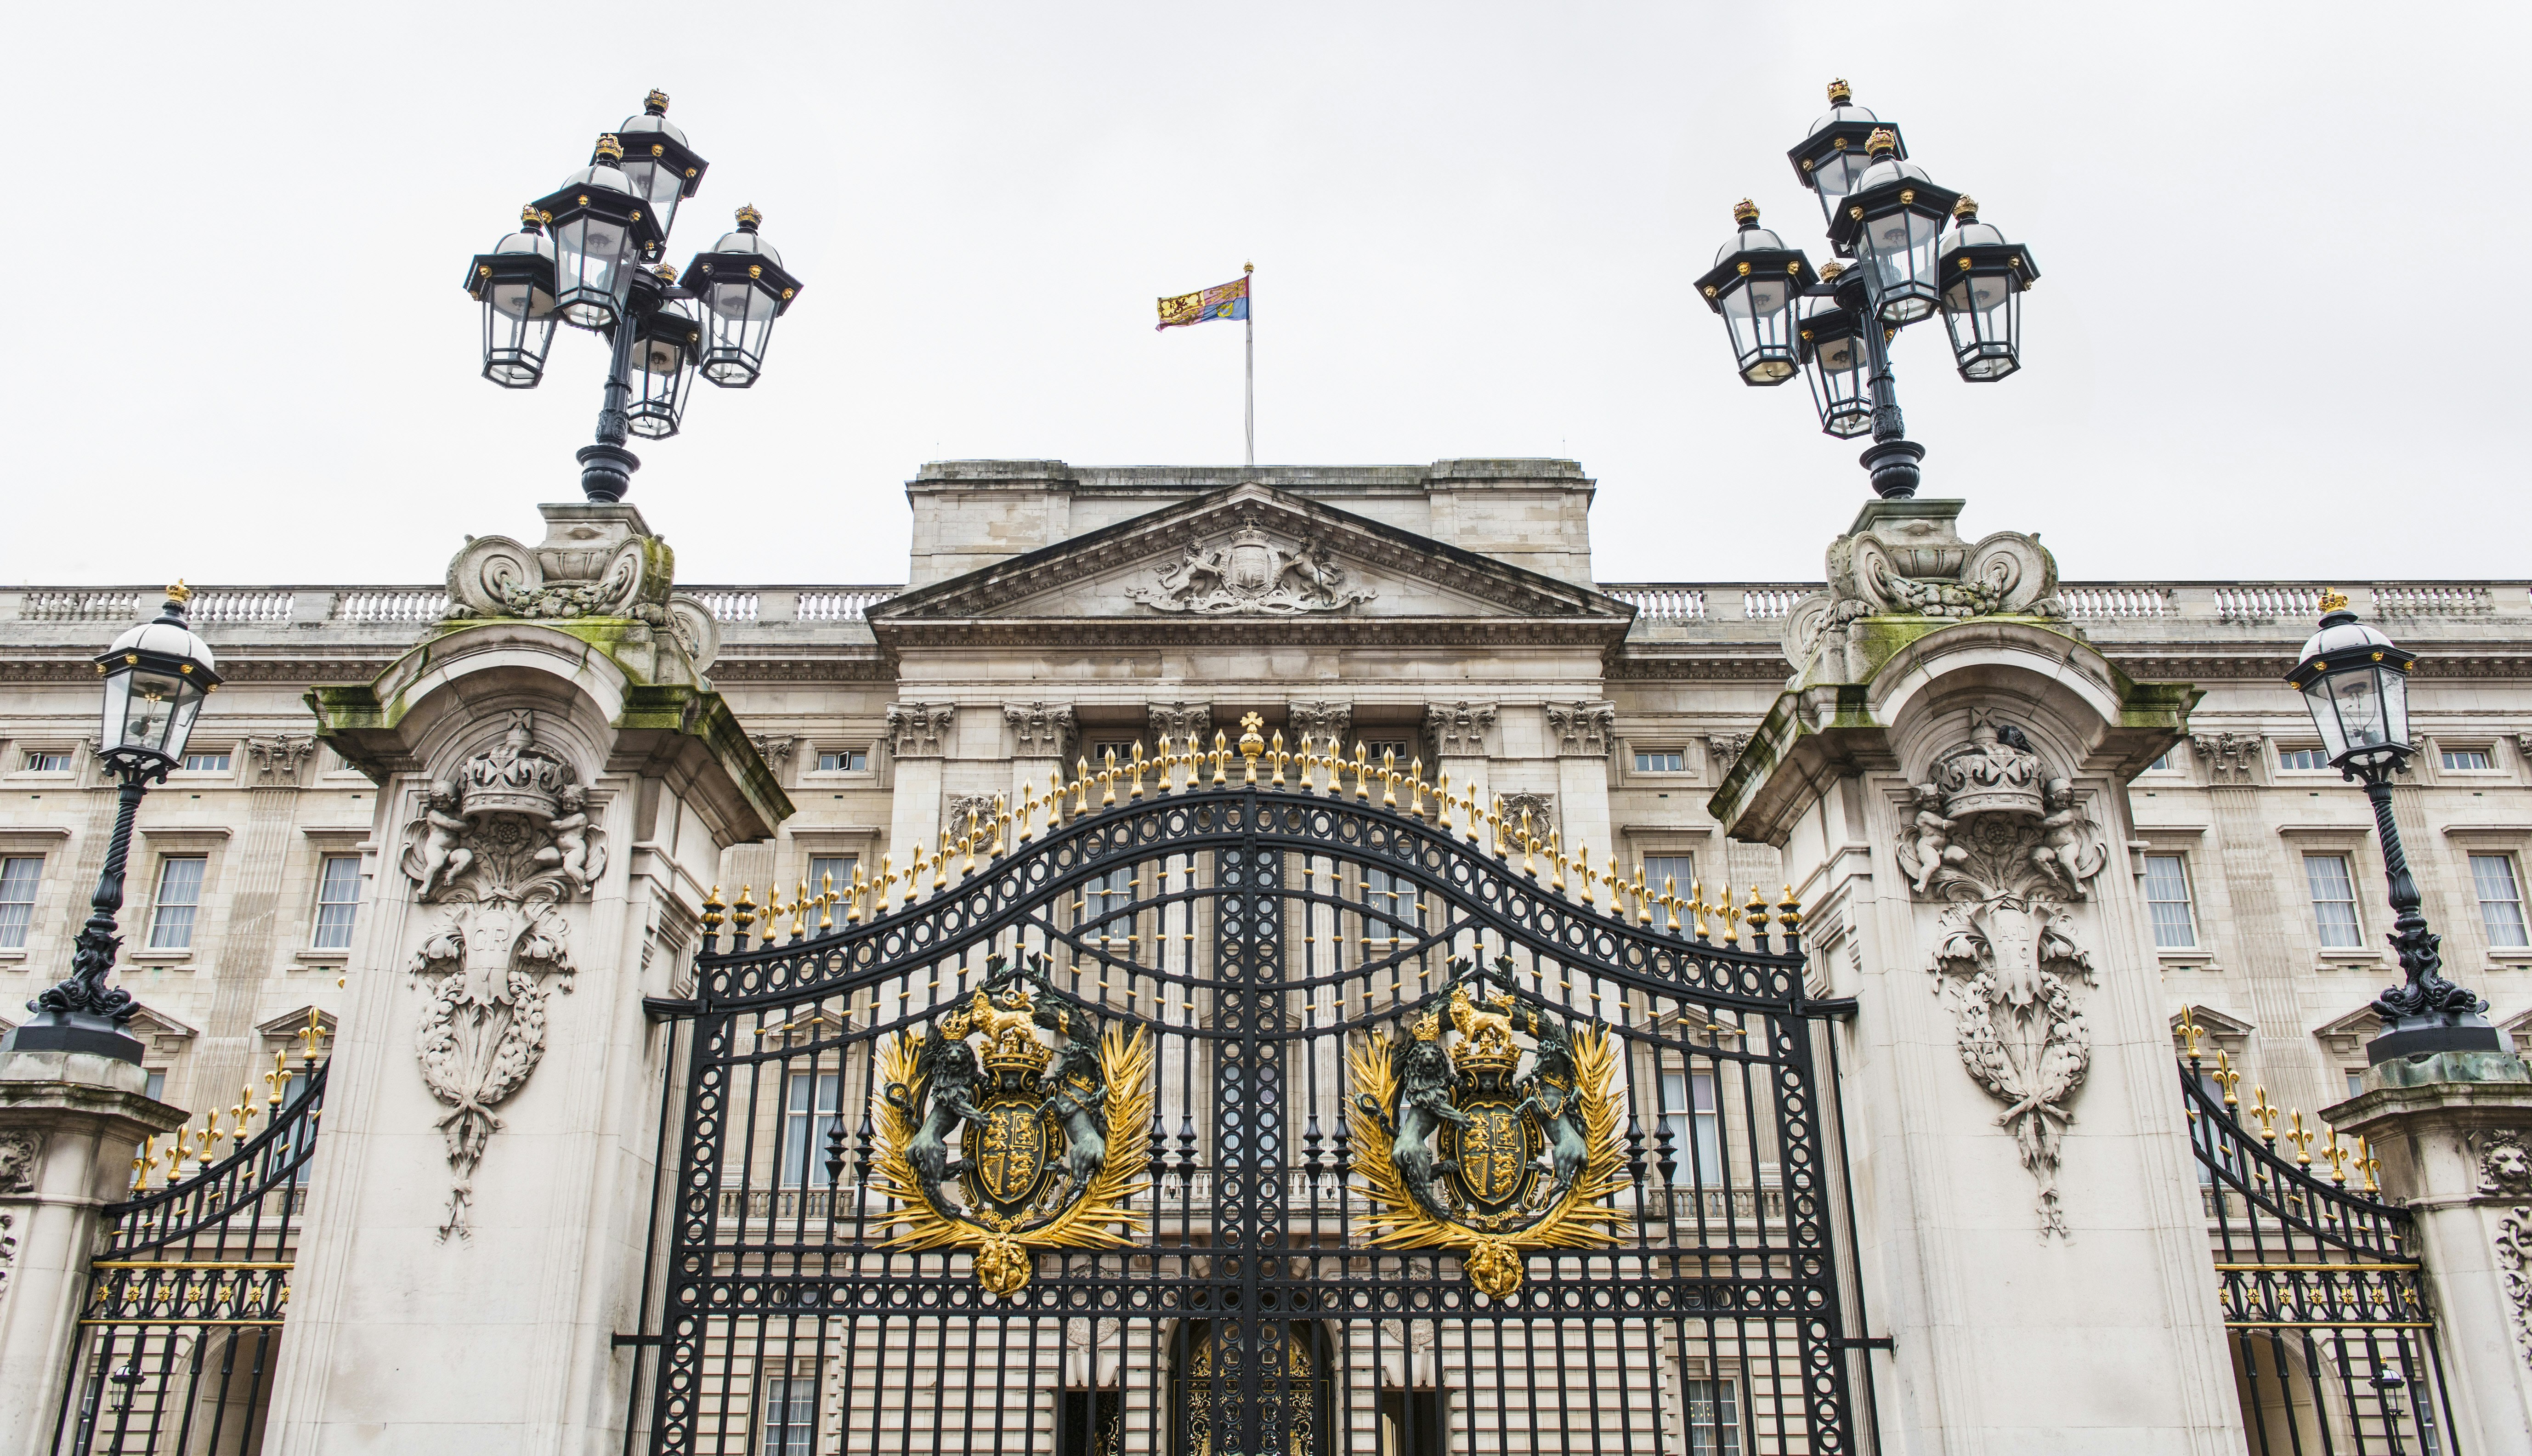 The closed black gates of Buckingham Palace in London, England